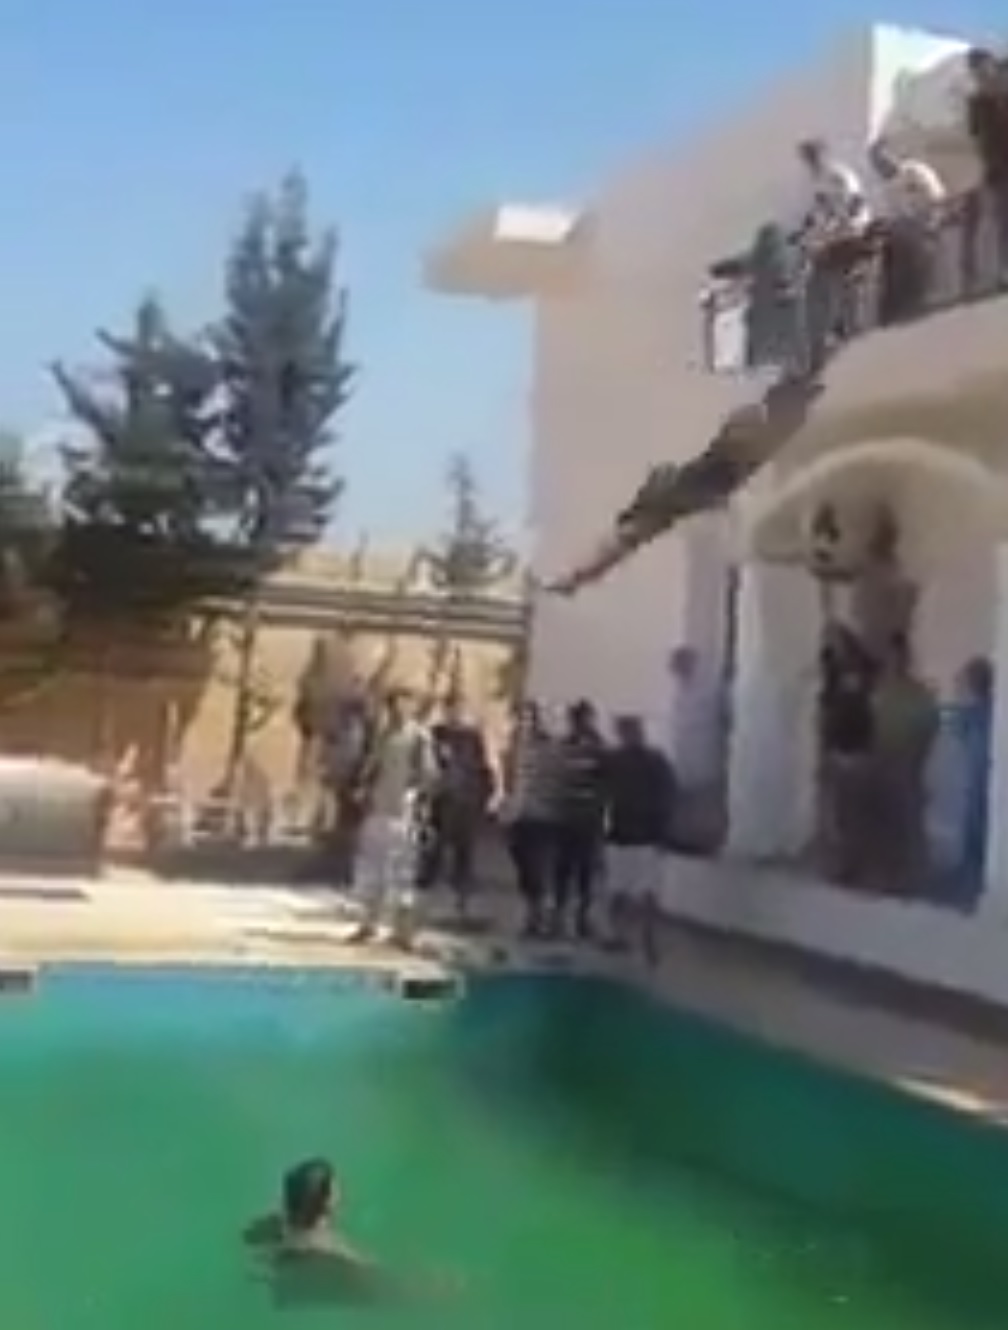 dawn-libya-us-embassy-tripoli-libya-swimming-pool-video.jpg